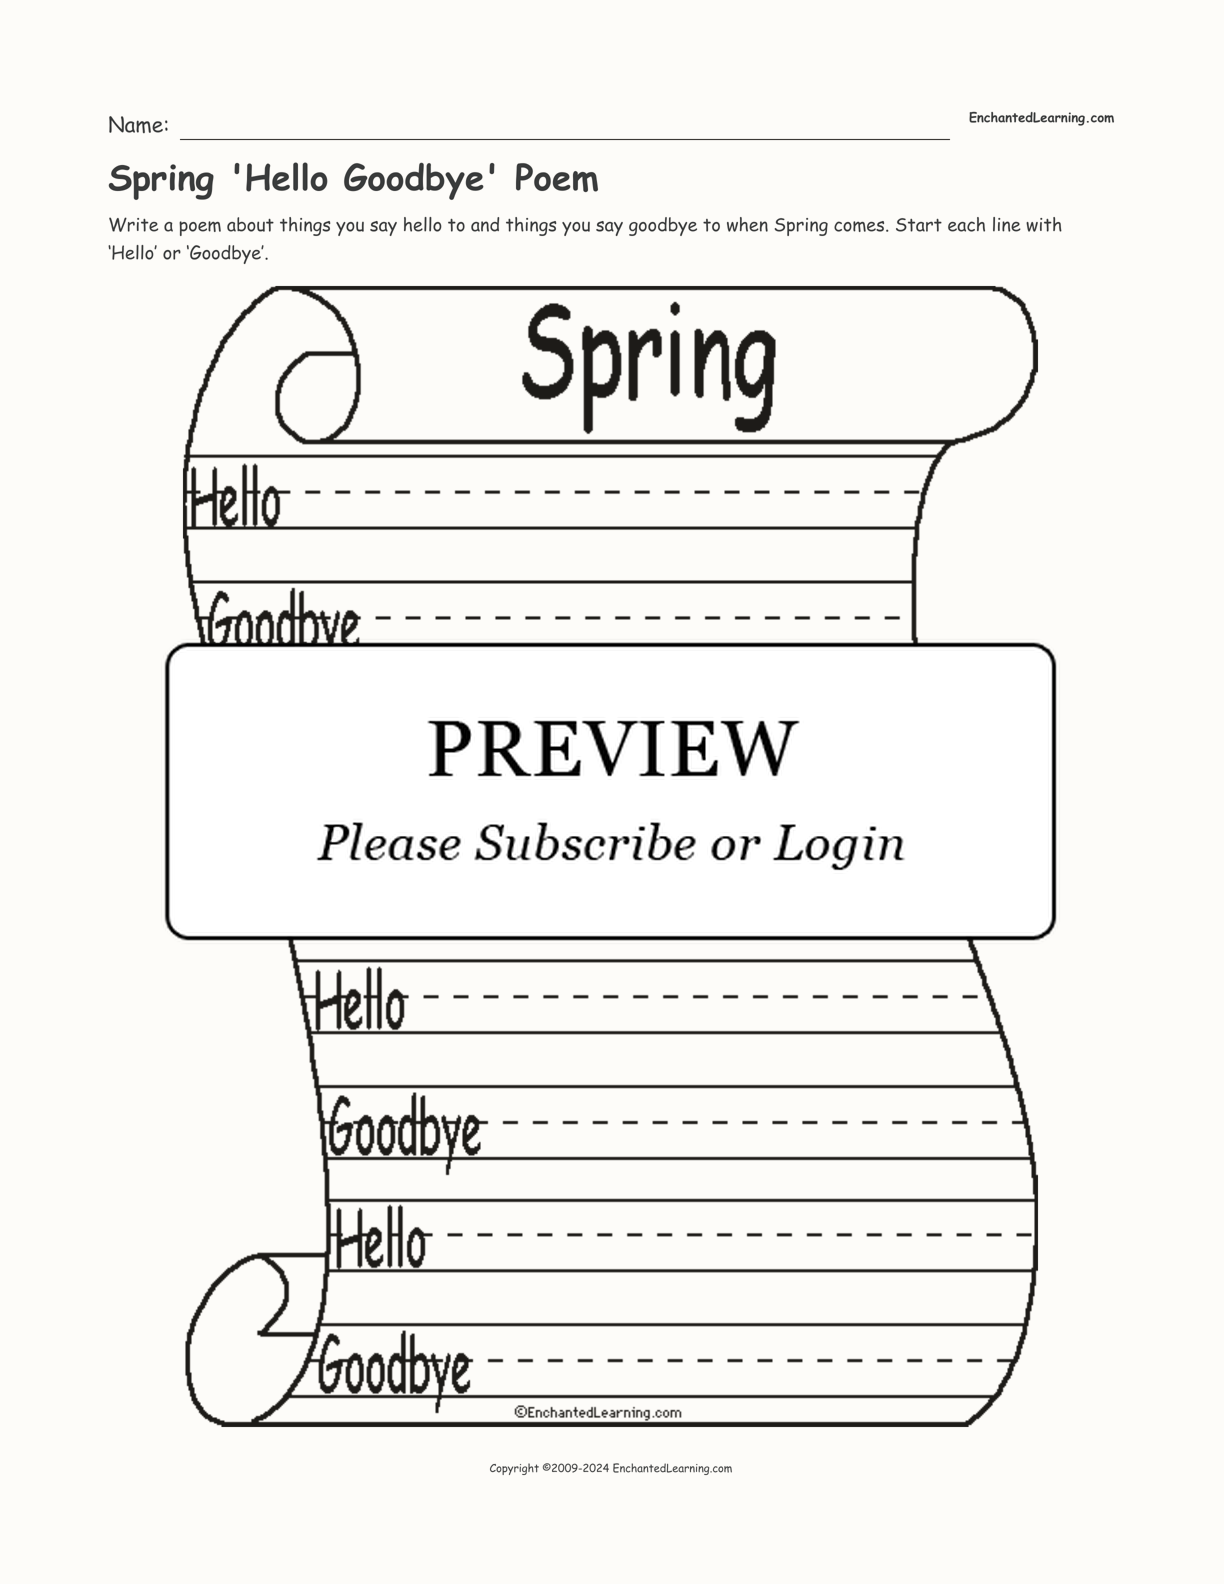 Spring 'Hello Goodbye' Poem interactive worksheet page 1